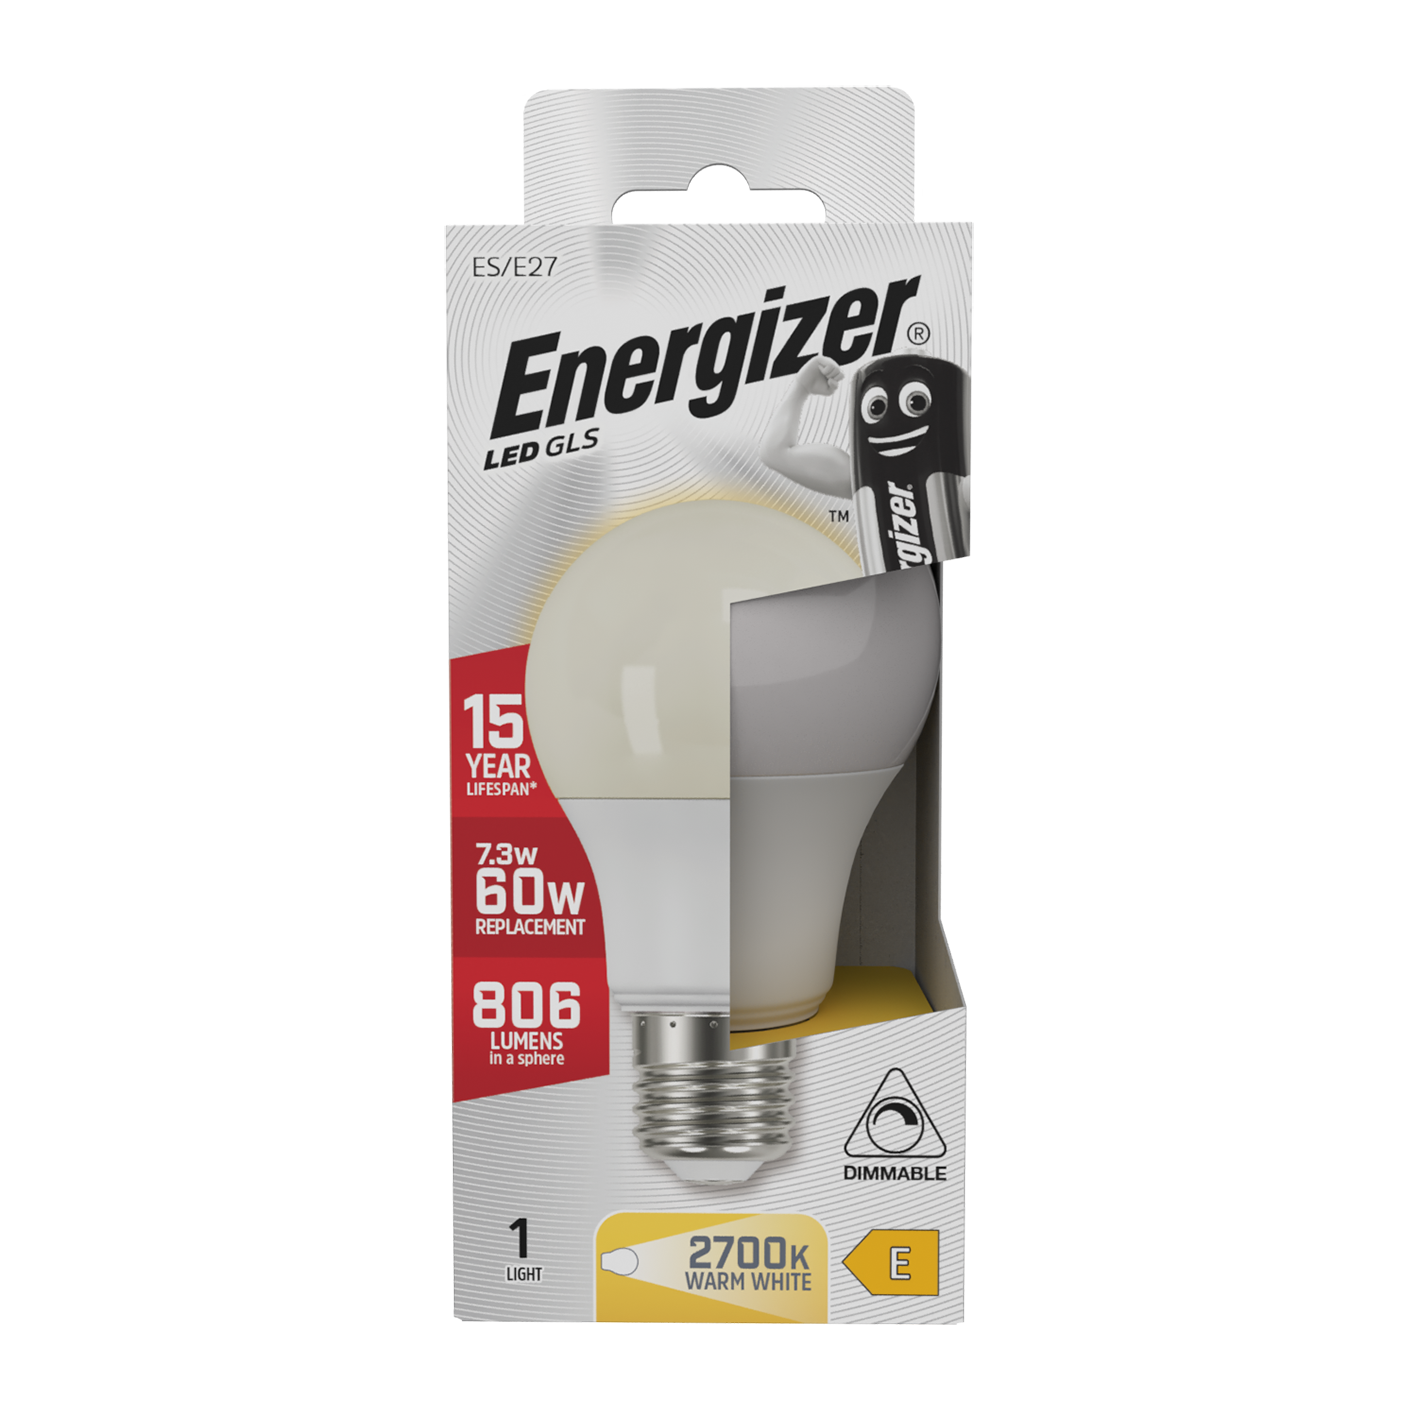 Energizer LED GLS E27 (ES) 806 Lúmenes 7,3W 2.700K (Blanco Cálido) Regulable, Caja de 1